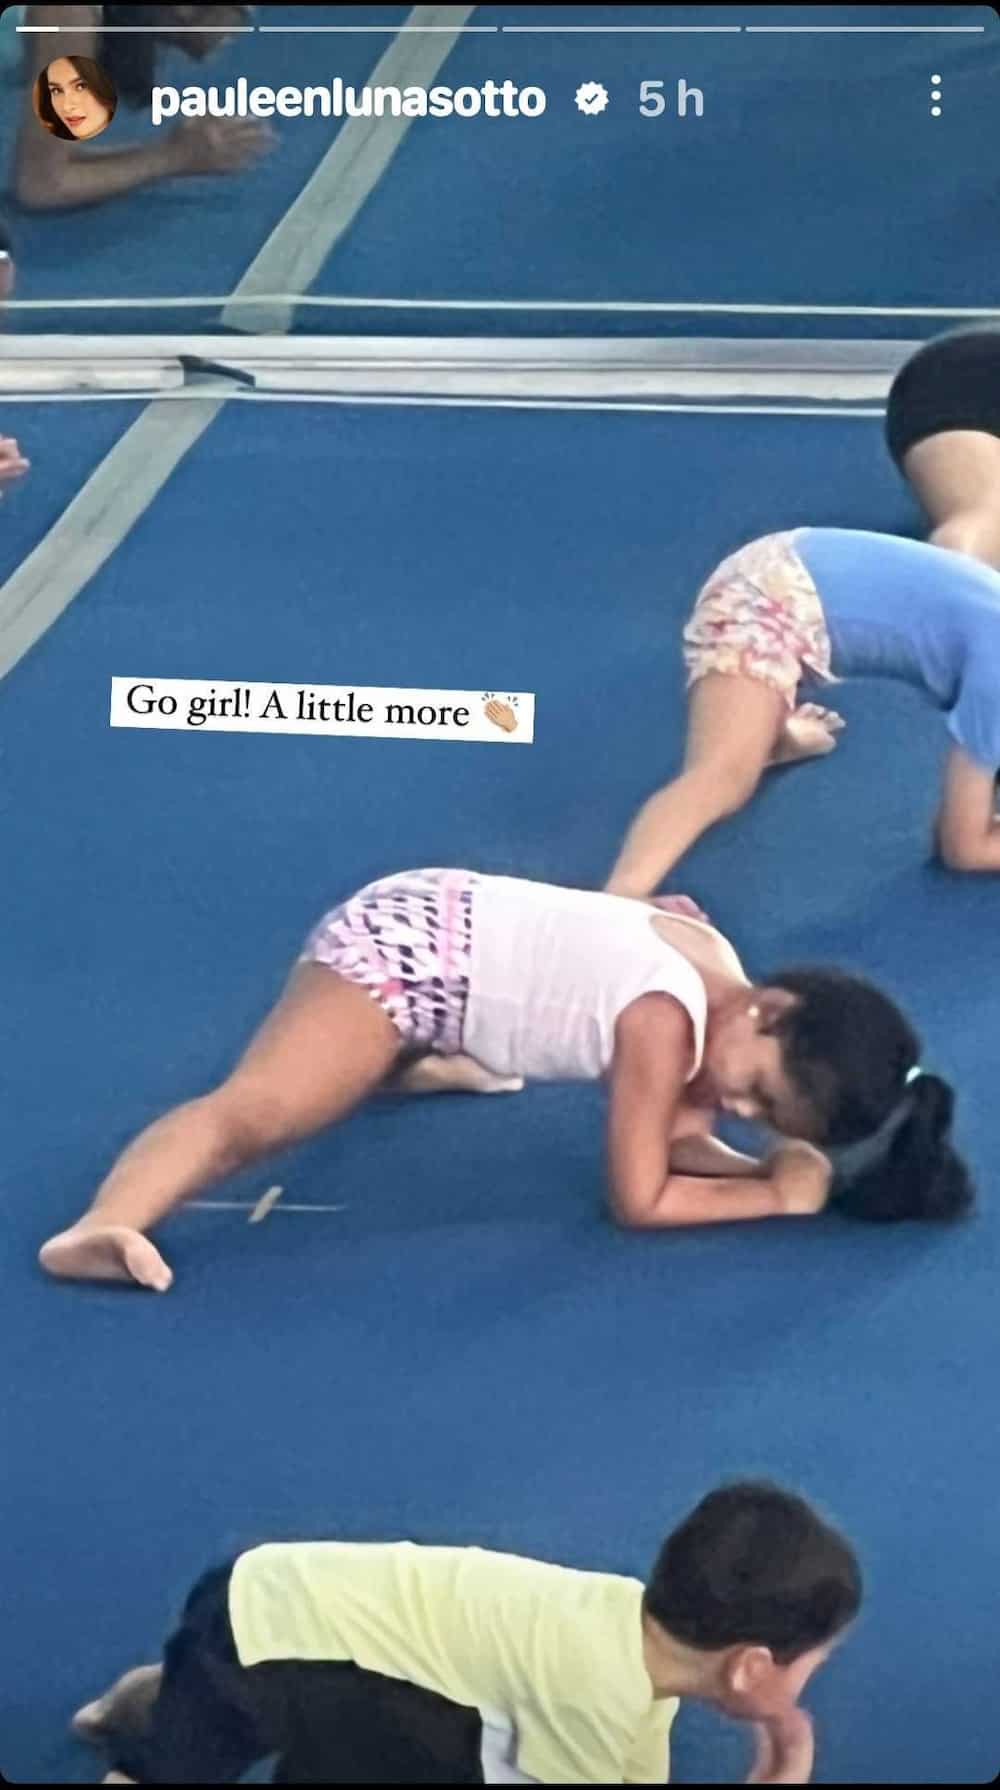 Pauleen Luna, proud na nag-post ukol sa gymnastics class ni Tali Sotto: “Go girl!”